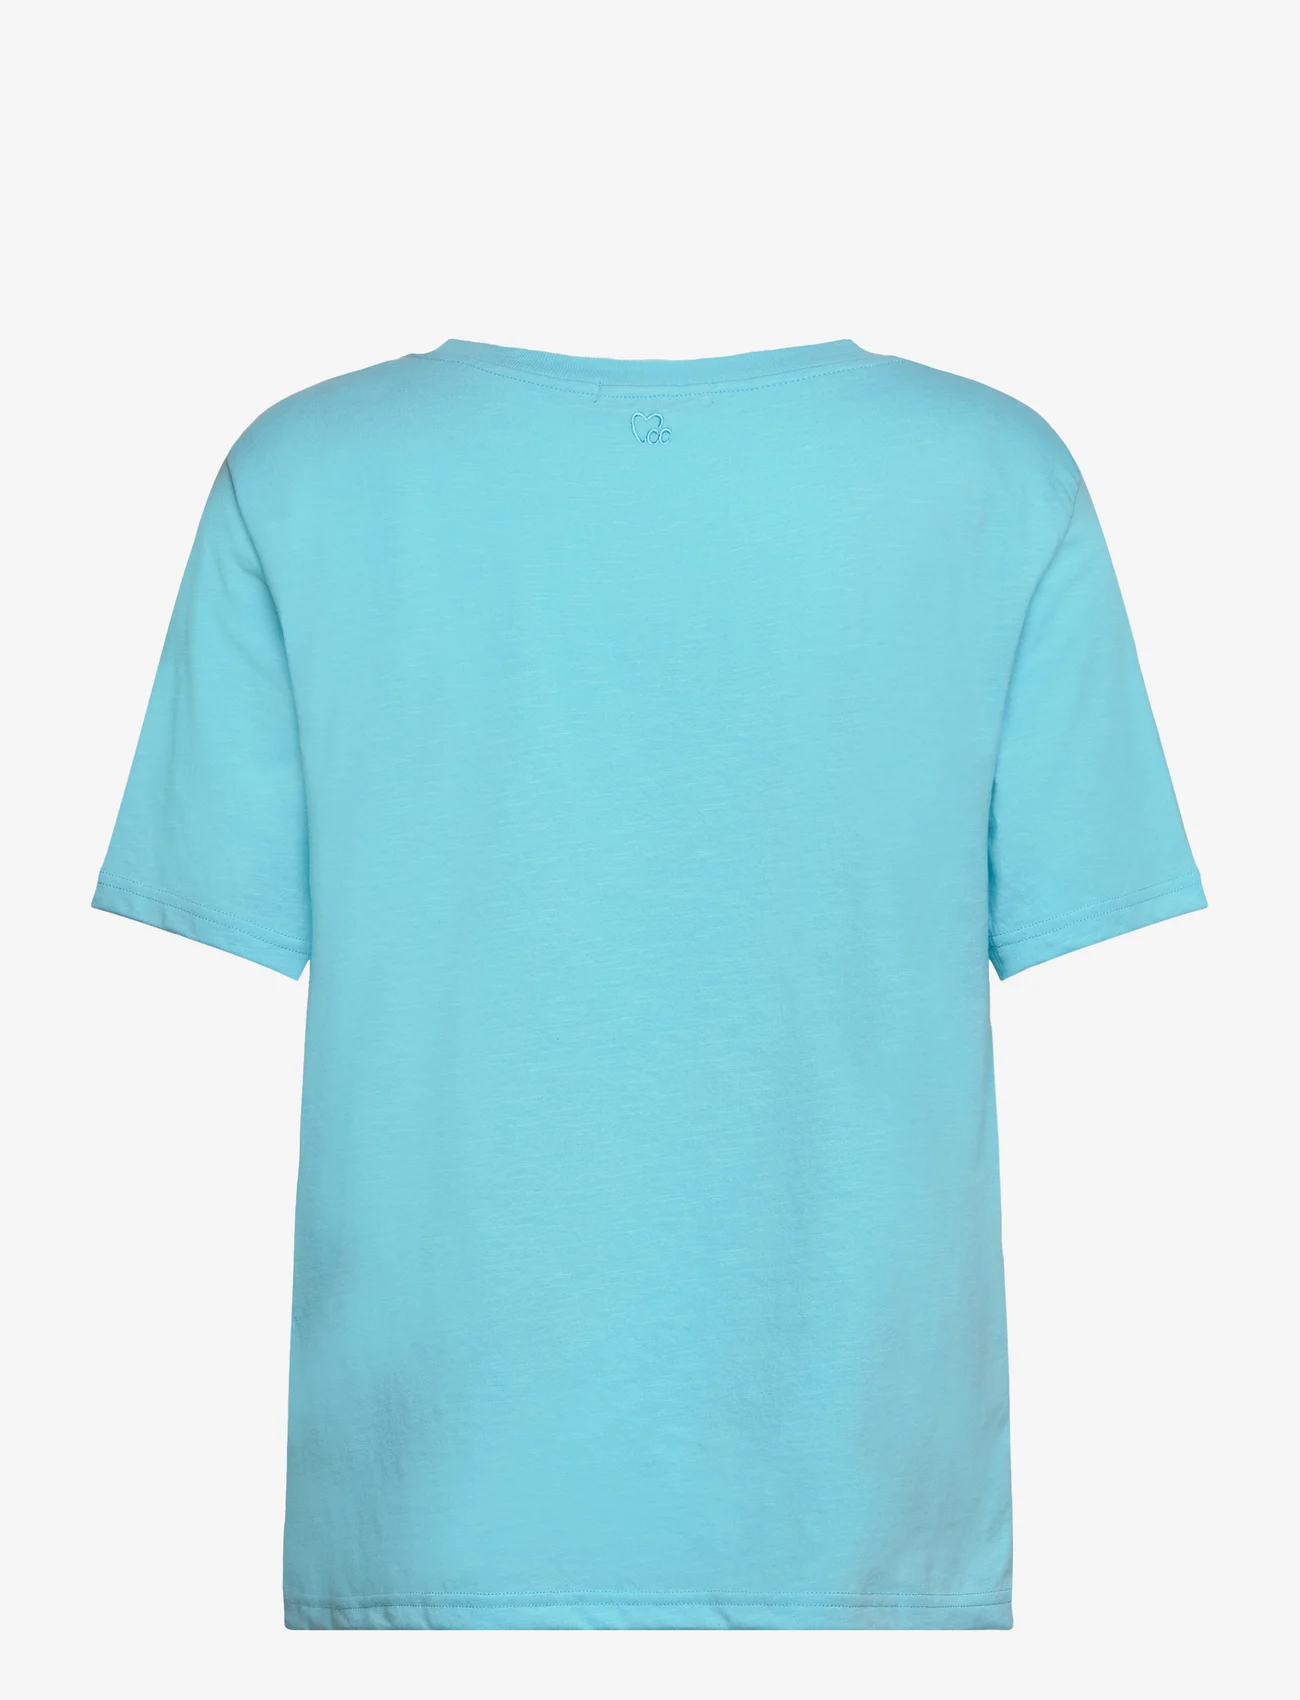 Coster Copenhagen - CC Heart regular t-shirt - lowest prices - aqua blue - 1